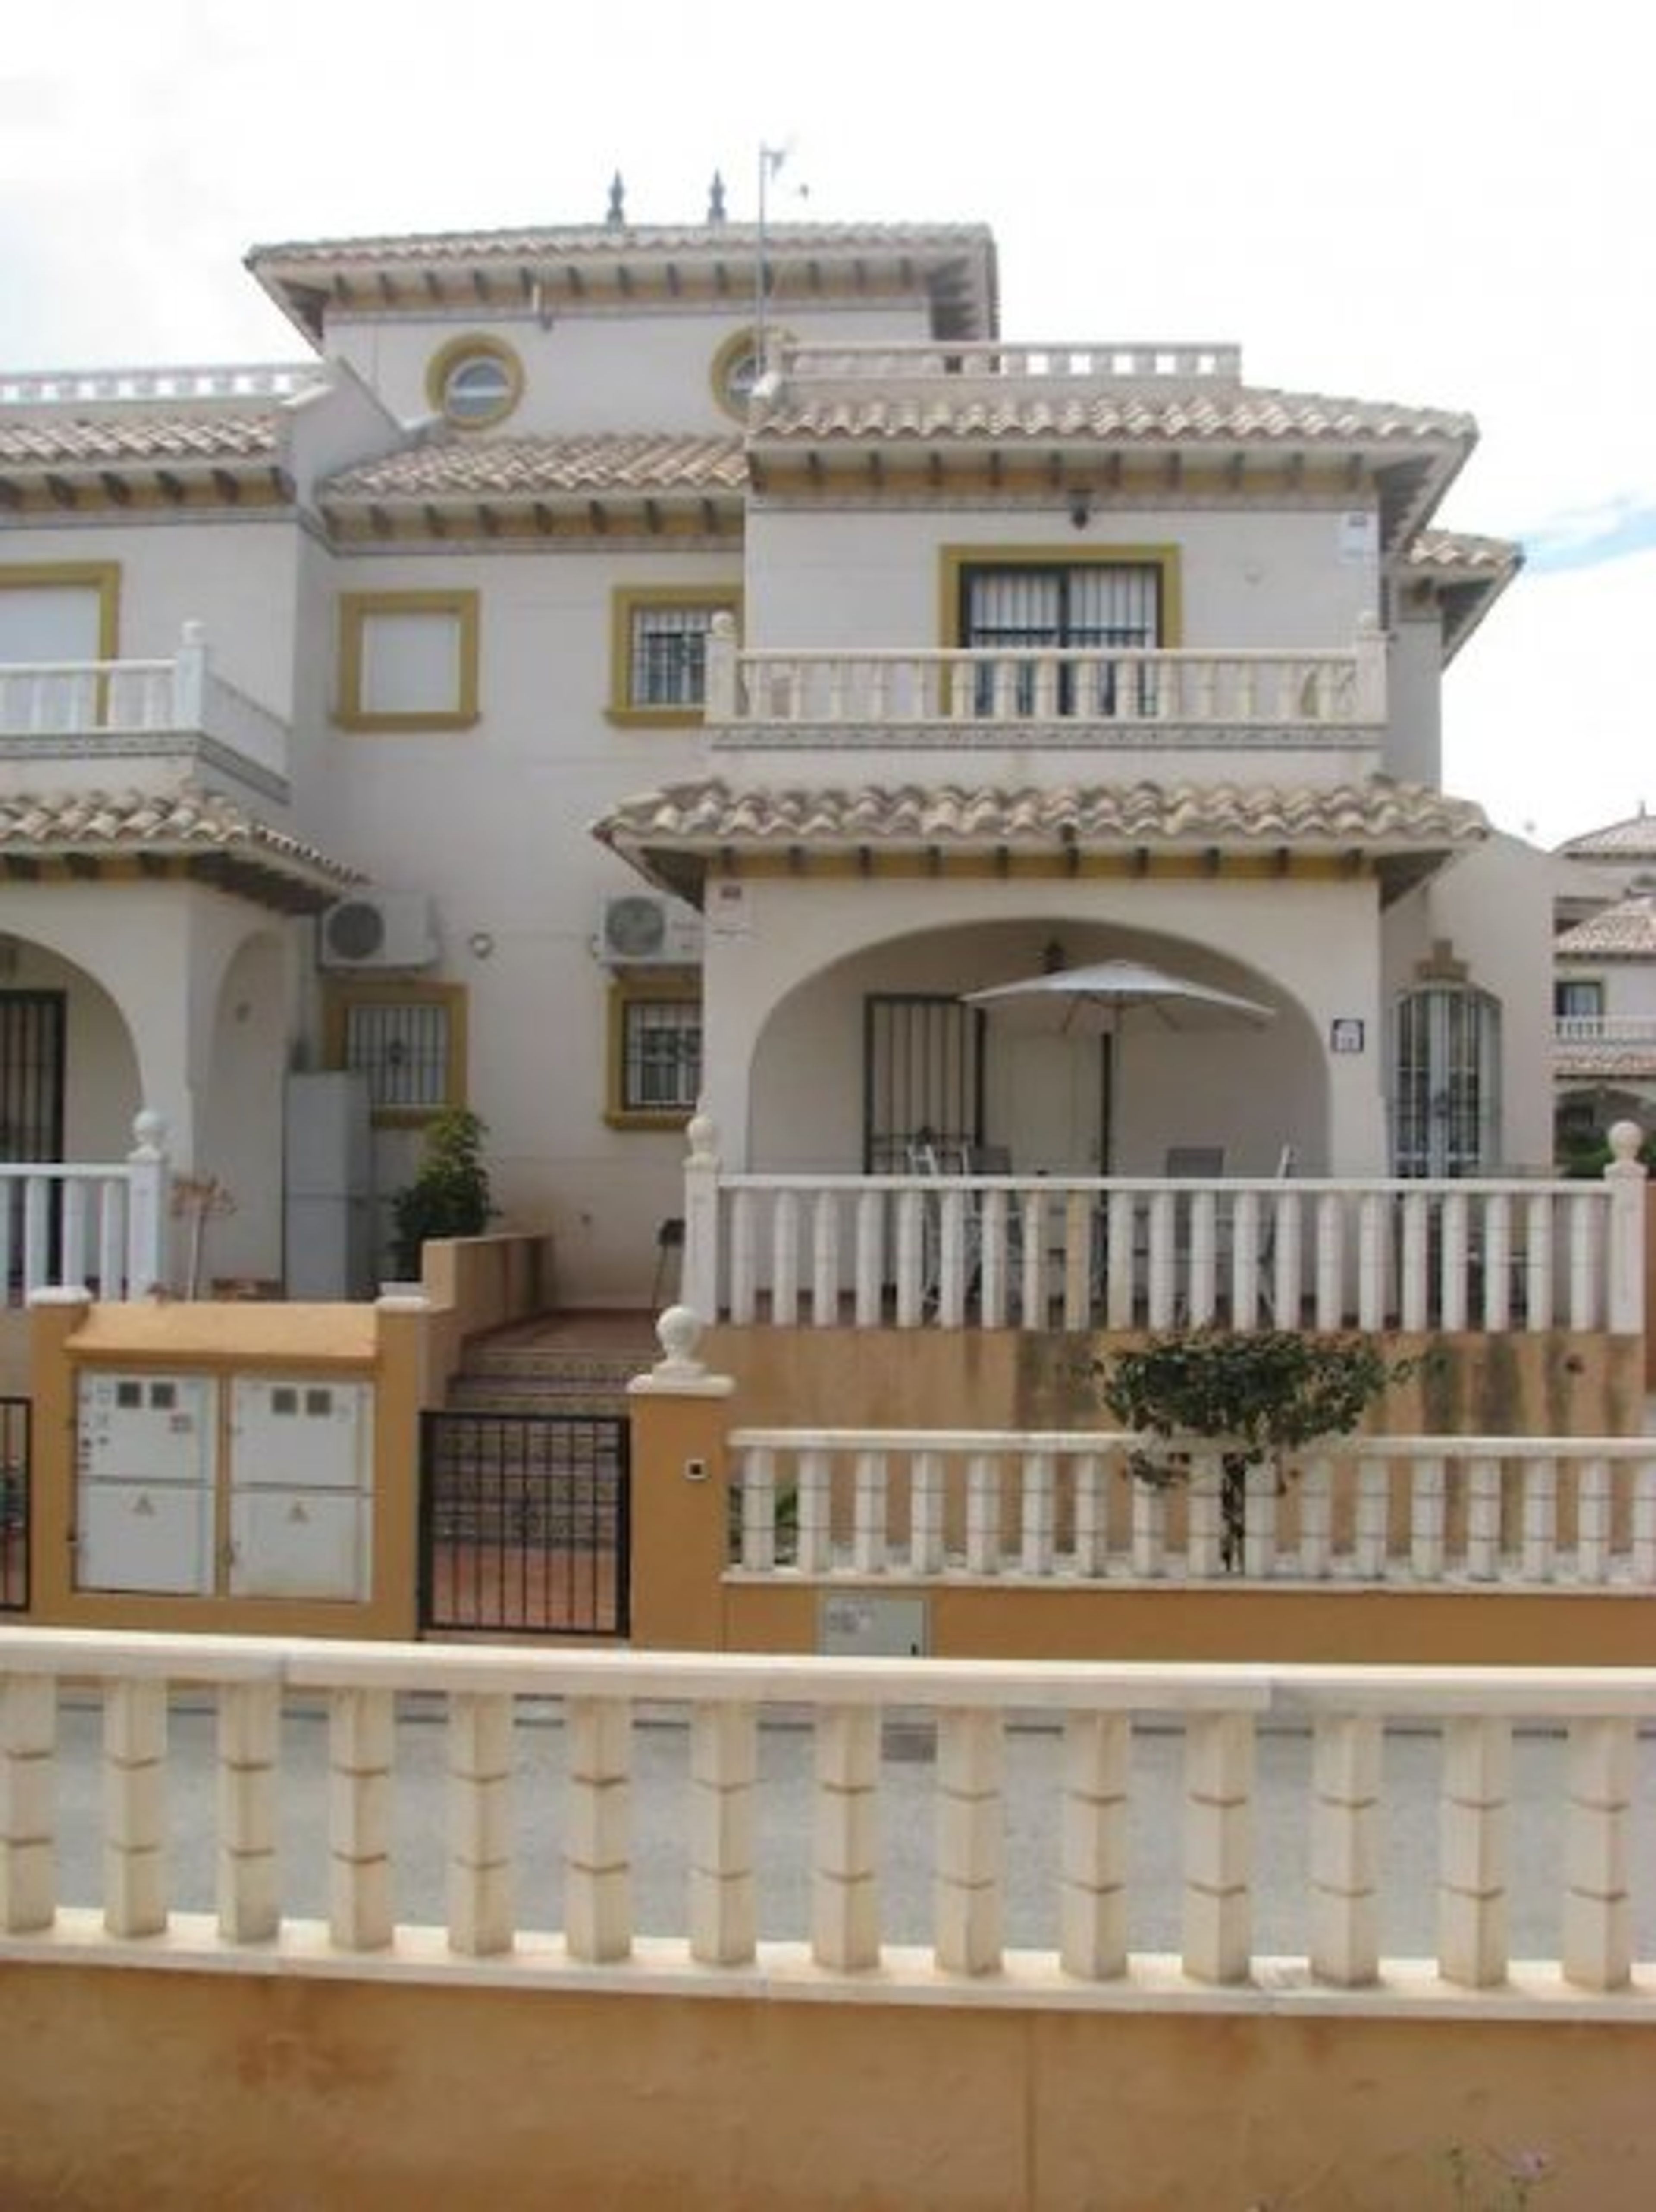 Villa front